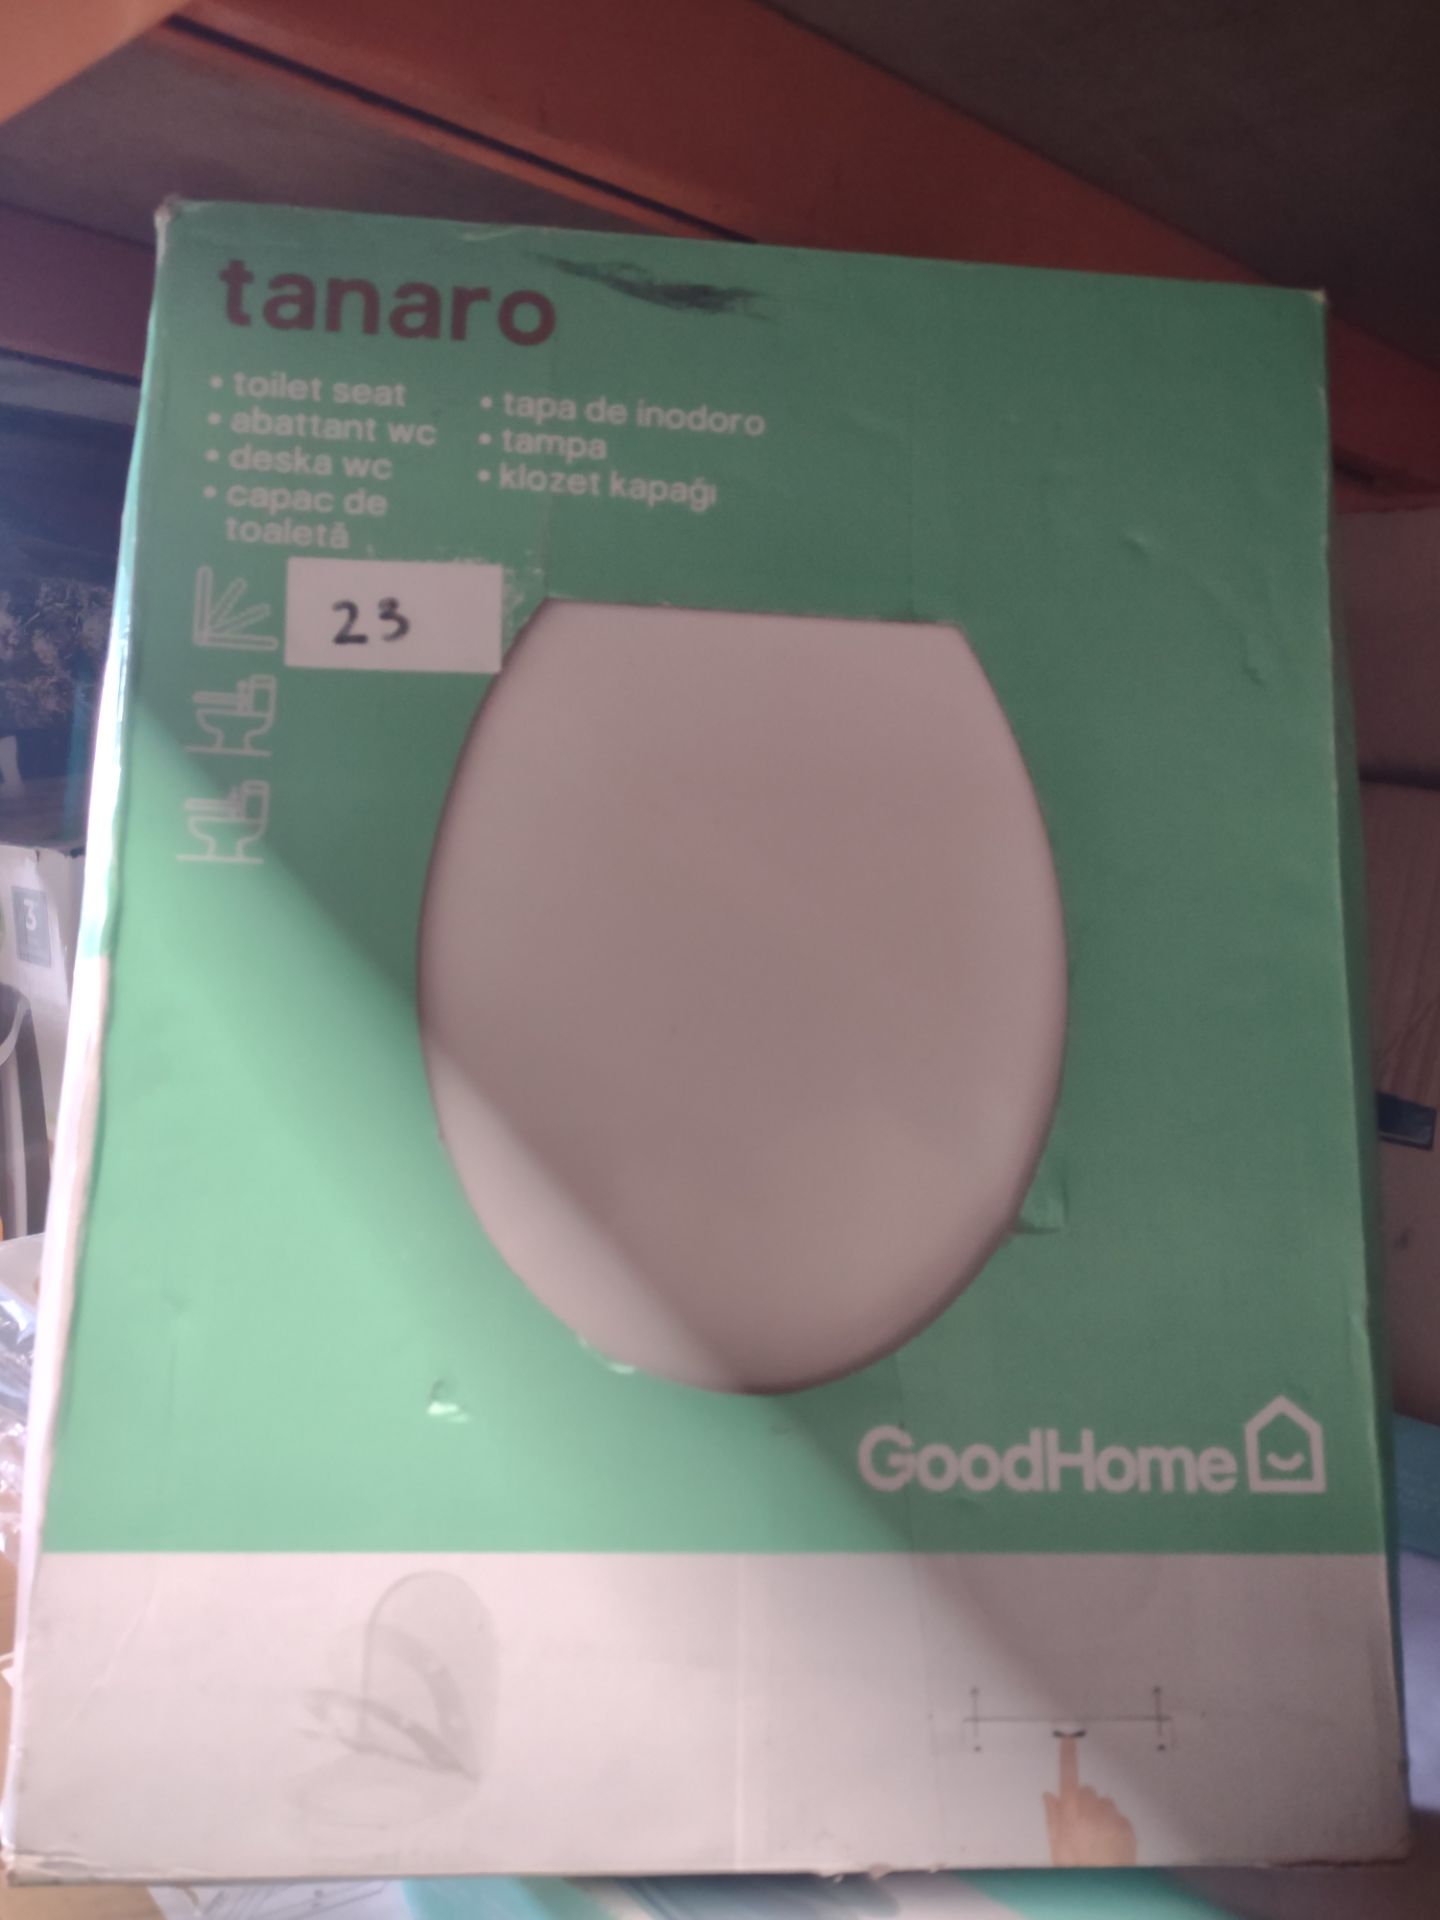 Goodhome Tanaro Toilet Seat. RRP £25 - Grade U